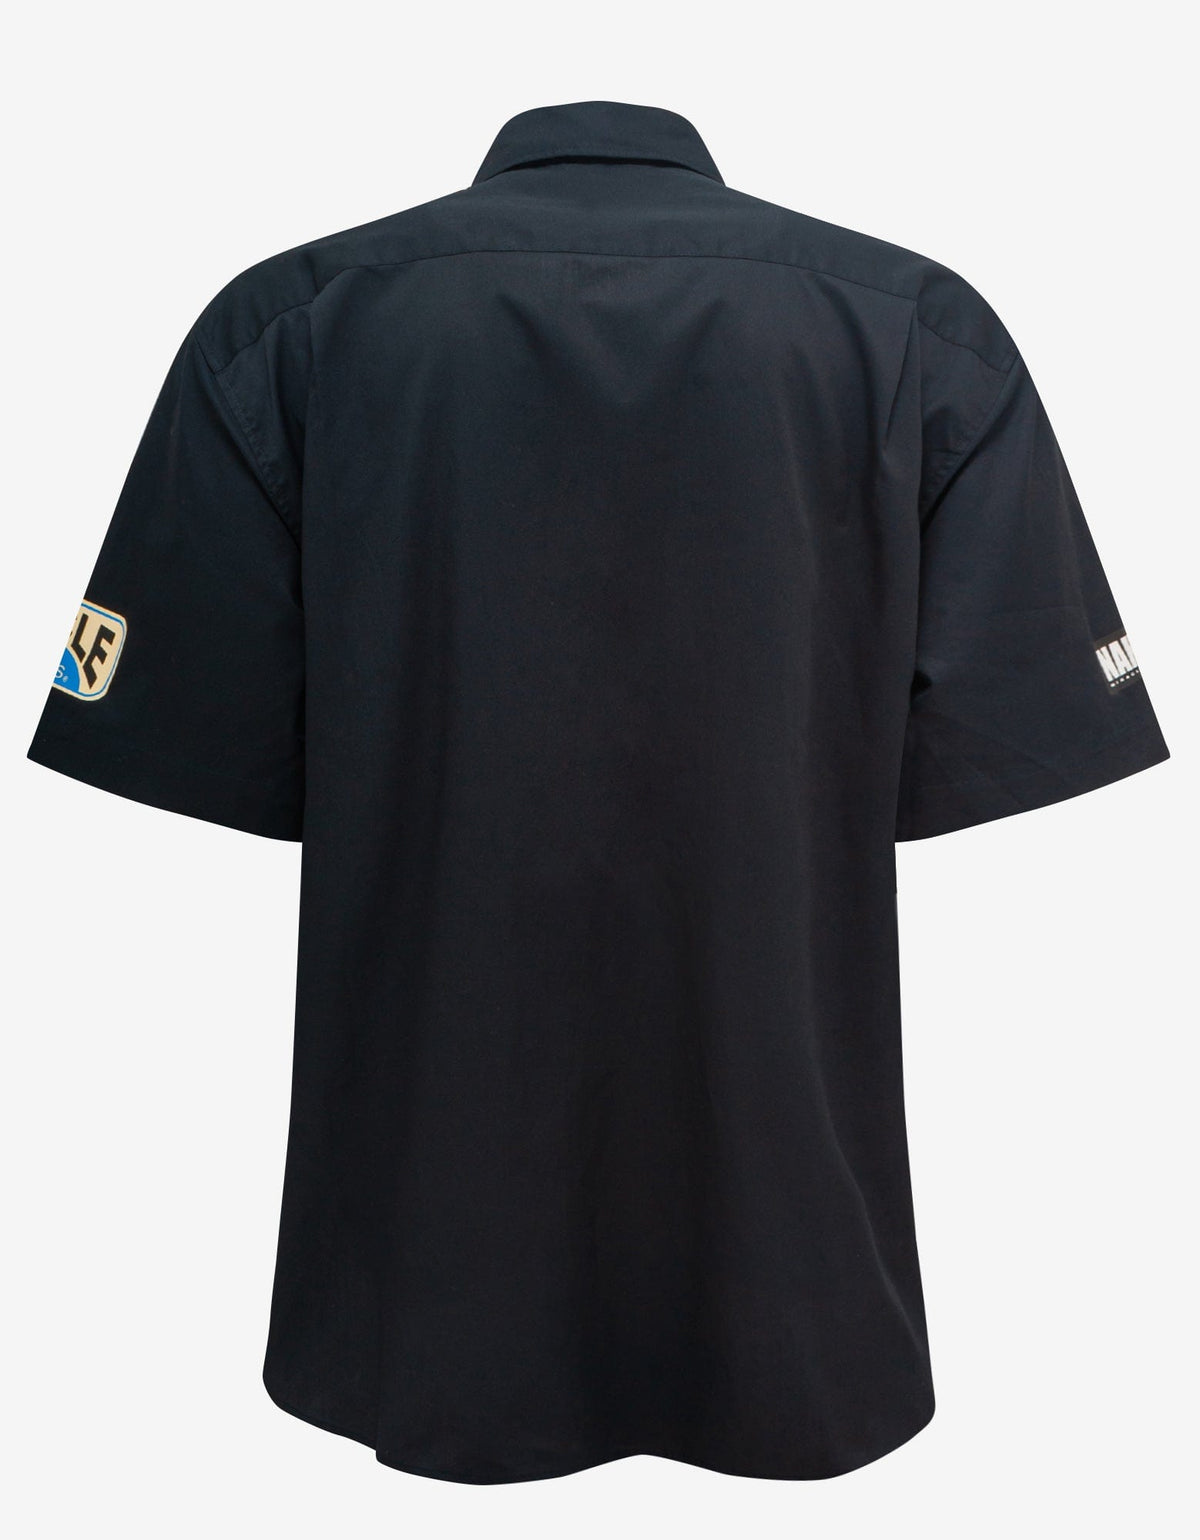 Nahmias Black Surf Comp Shirt